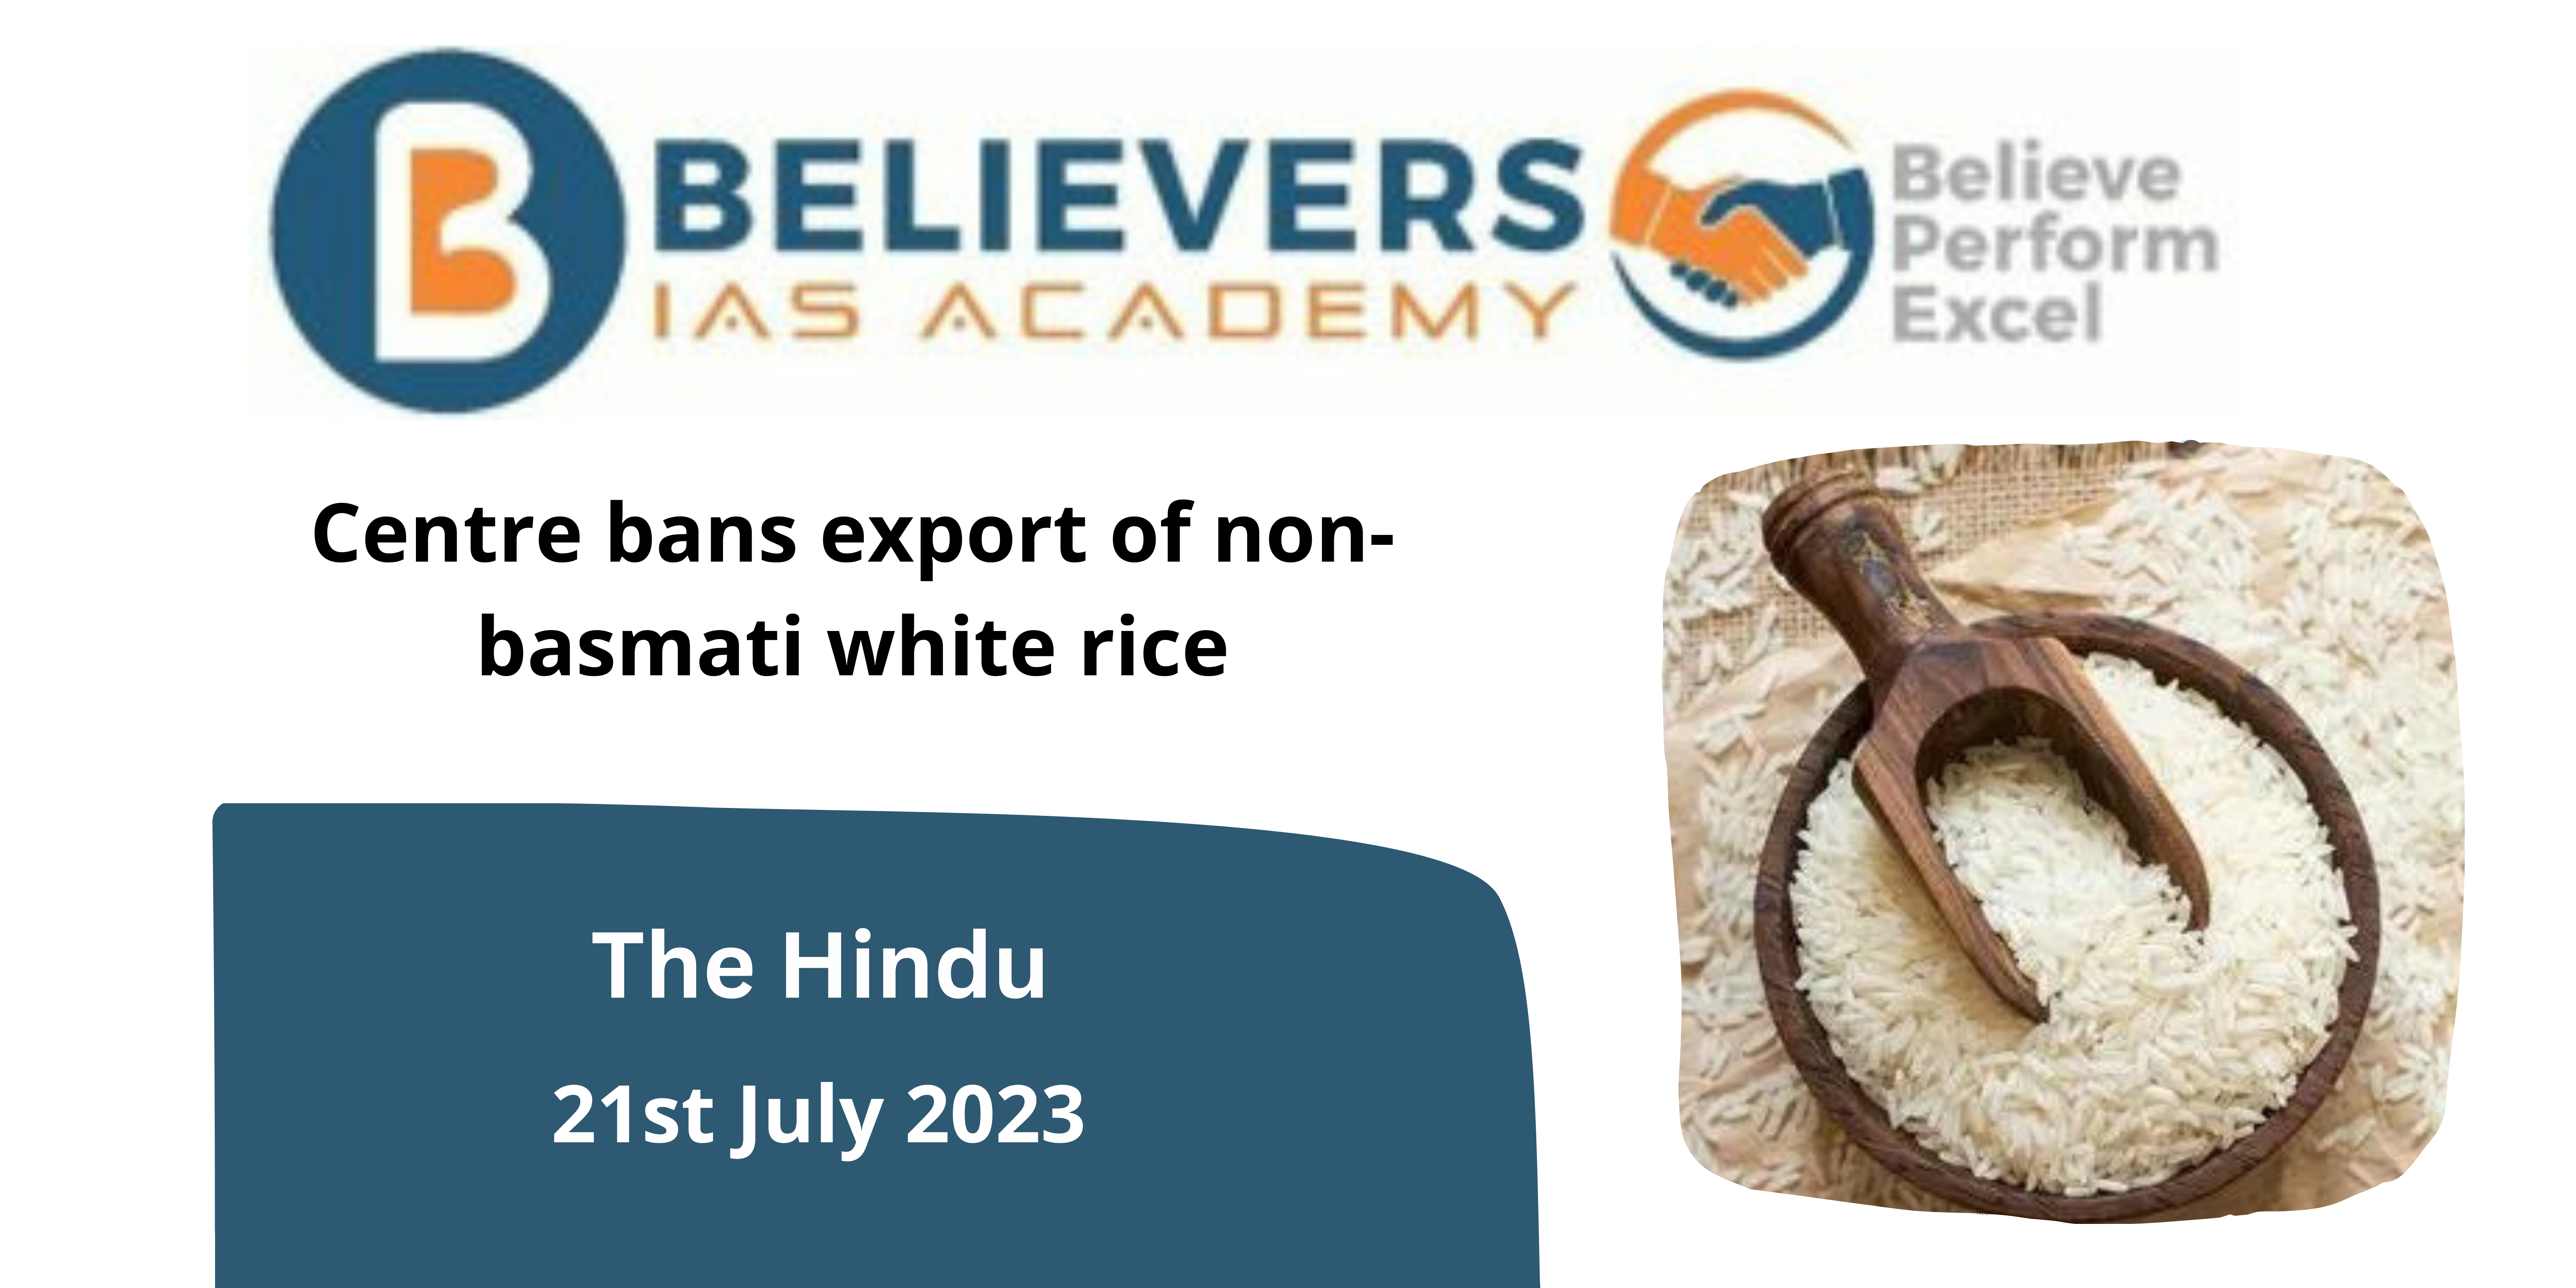 Centre bans export of non-basmati white rice